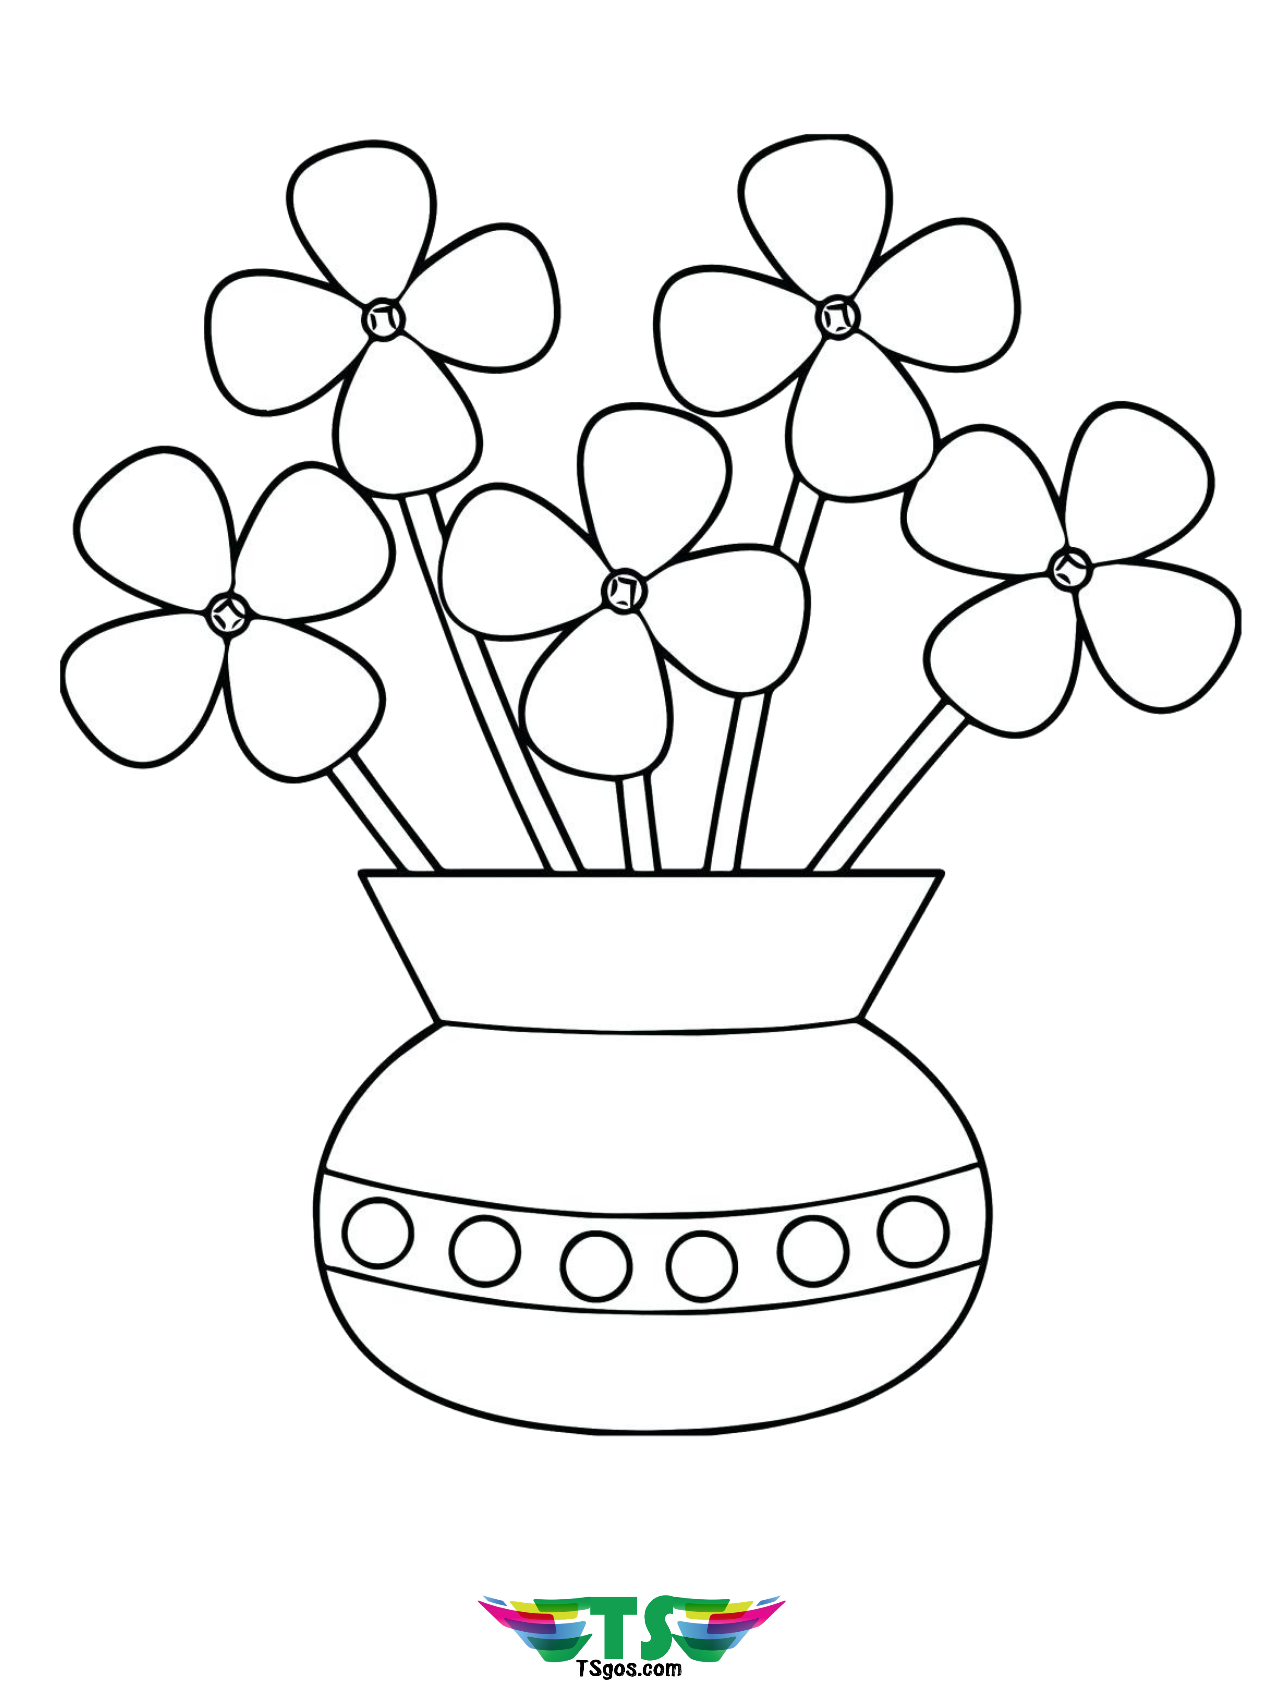 Printable Flowers in a Vase Coloring Page - TSgos.com - TSgos.com